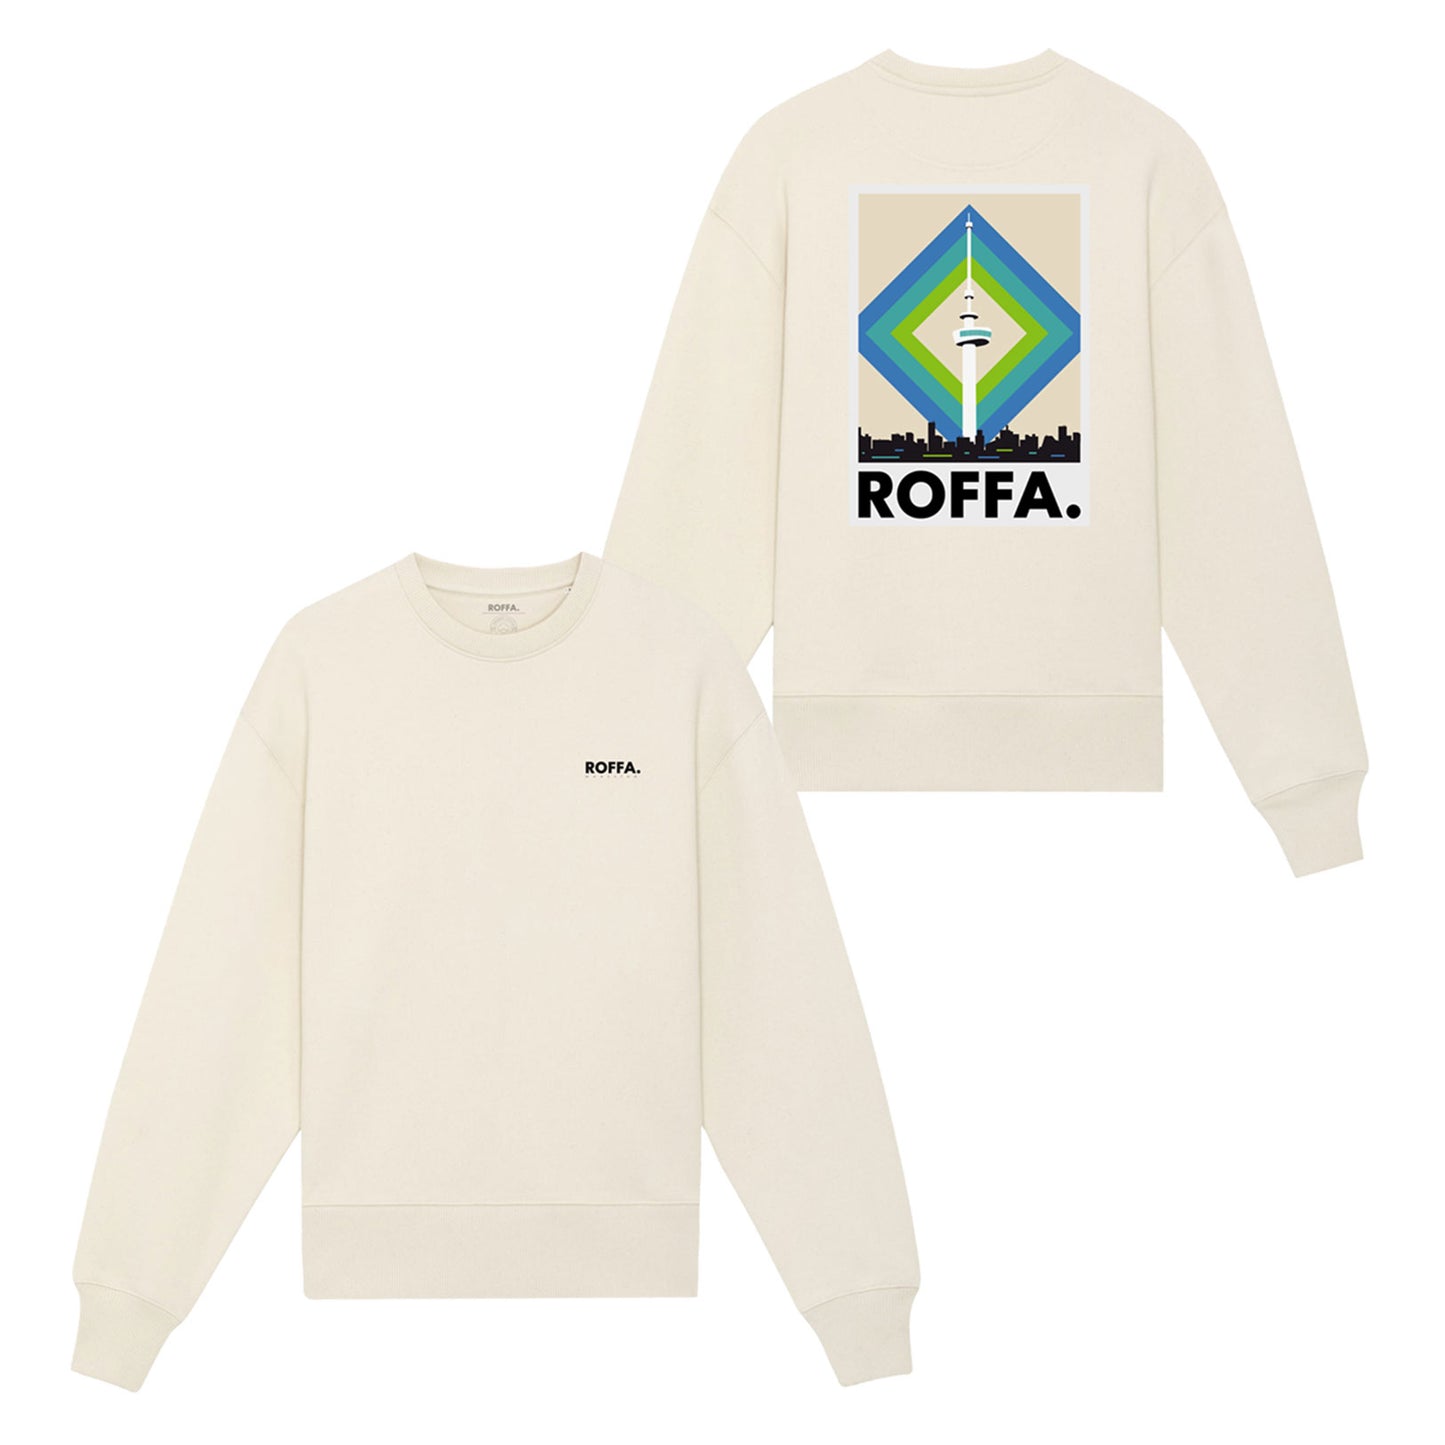 Witte trui met ROFFA. en euromast opdruk